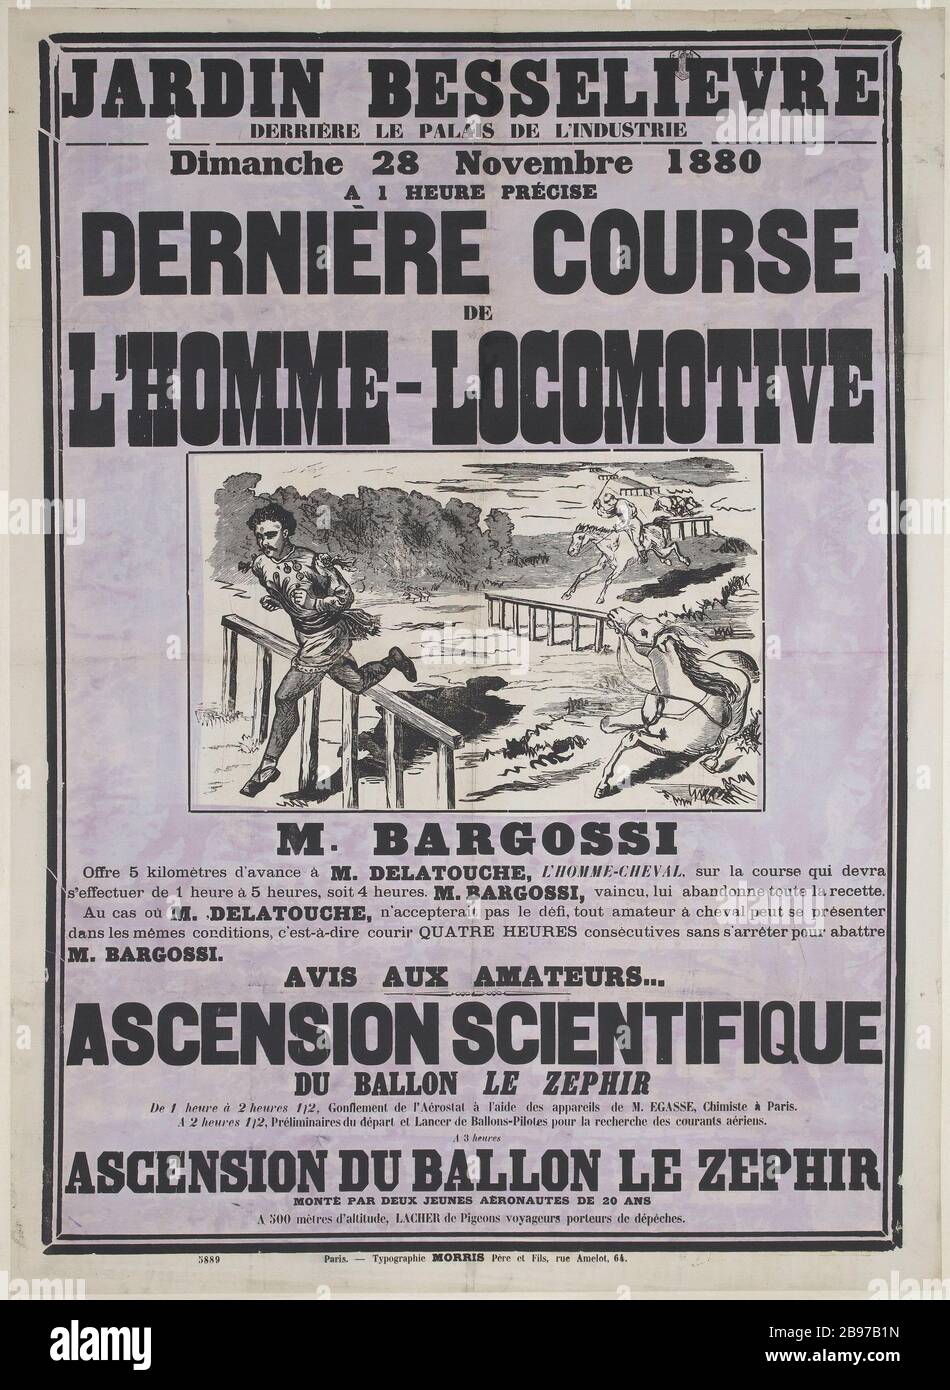 GARDEN Besselièvre Mr. BARGOSSI MAN LOCOMOTIVE Anonyme. "Jardin  Besselièvre, M. Bargossi l'homme-locomotive". Typographie, 1880. Paris,  musée Carnavalet Stock Photo - Alamy